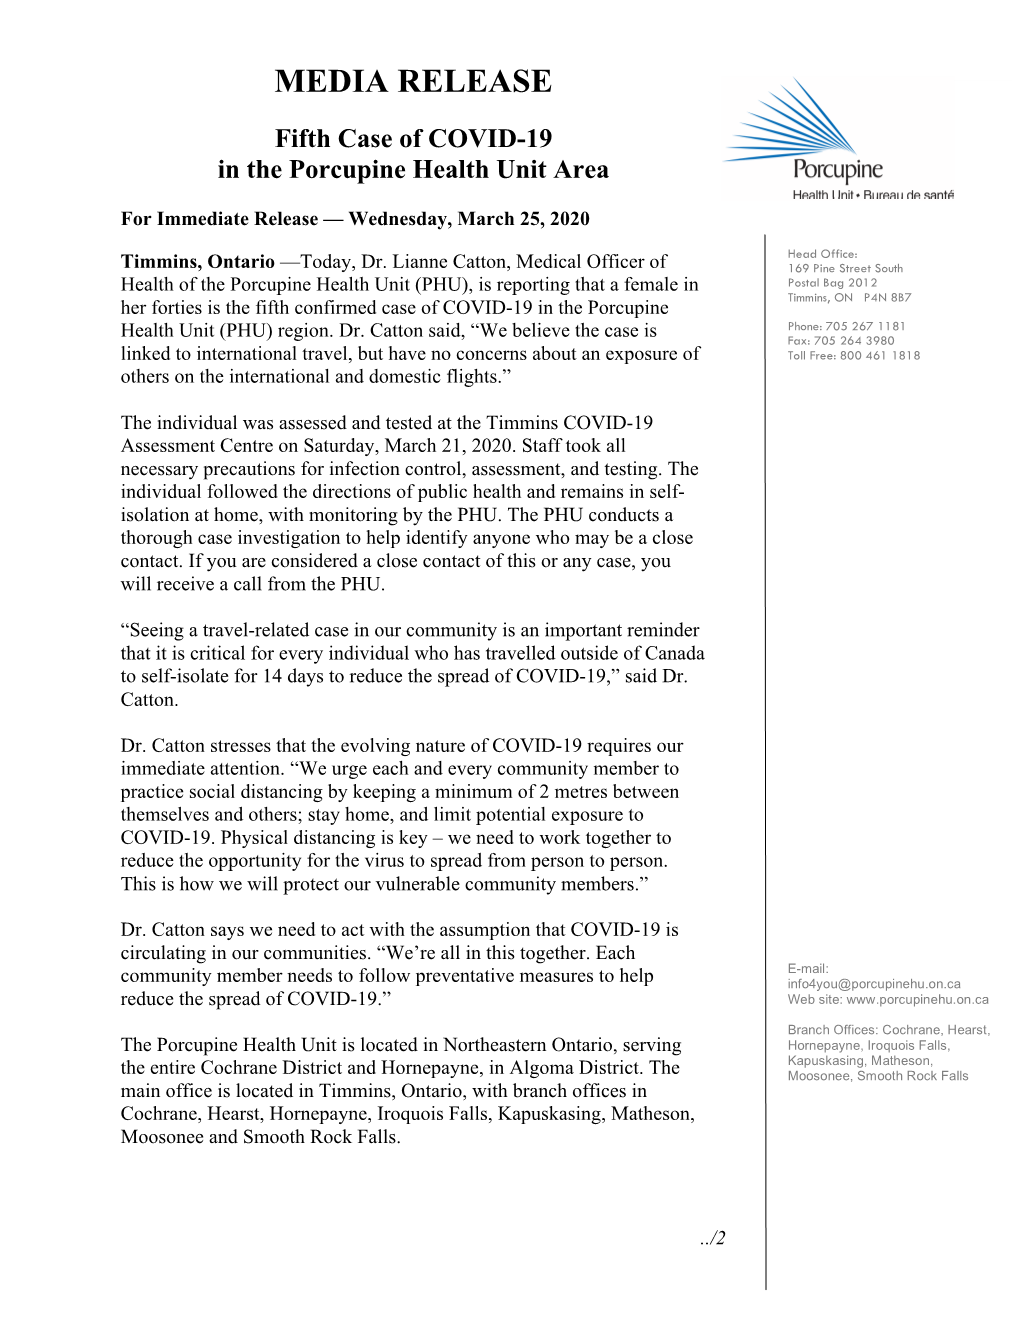 Fifth Case of COVID-19 in the Porcupine Health Unit Area